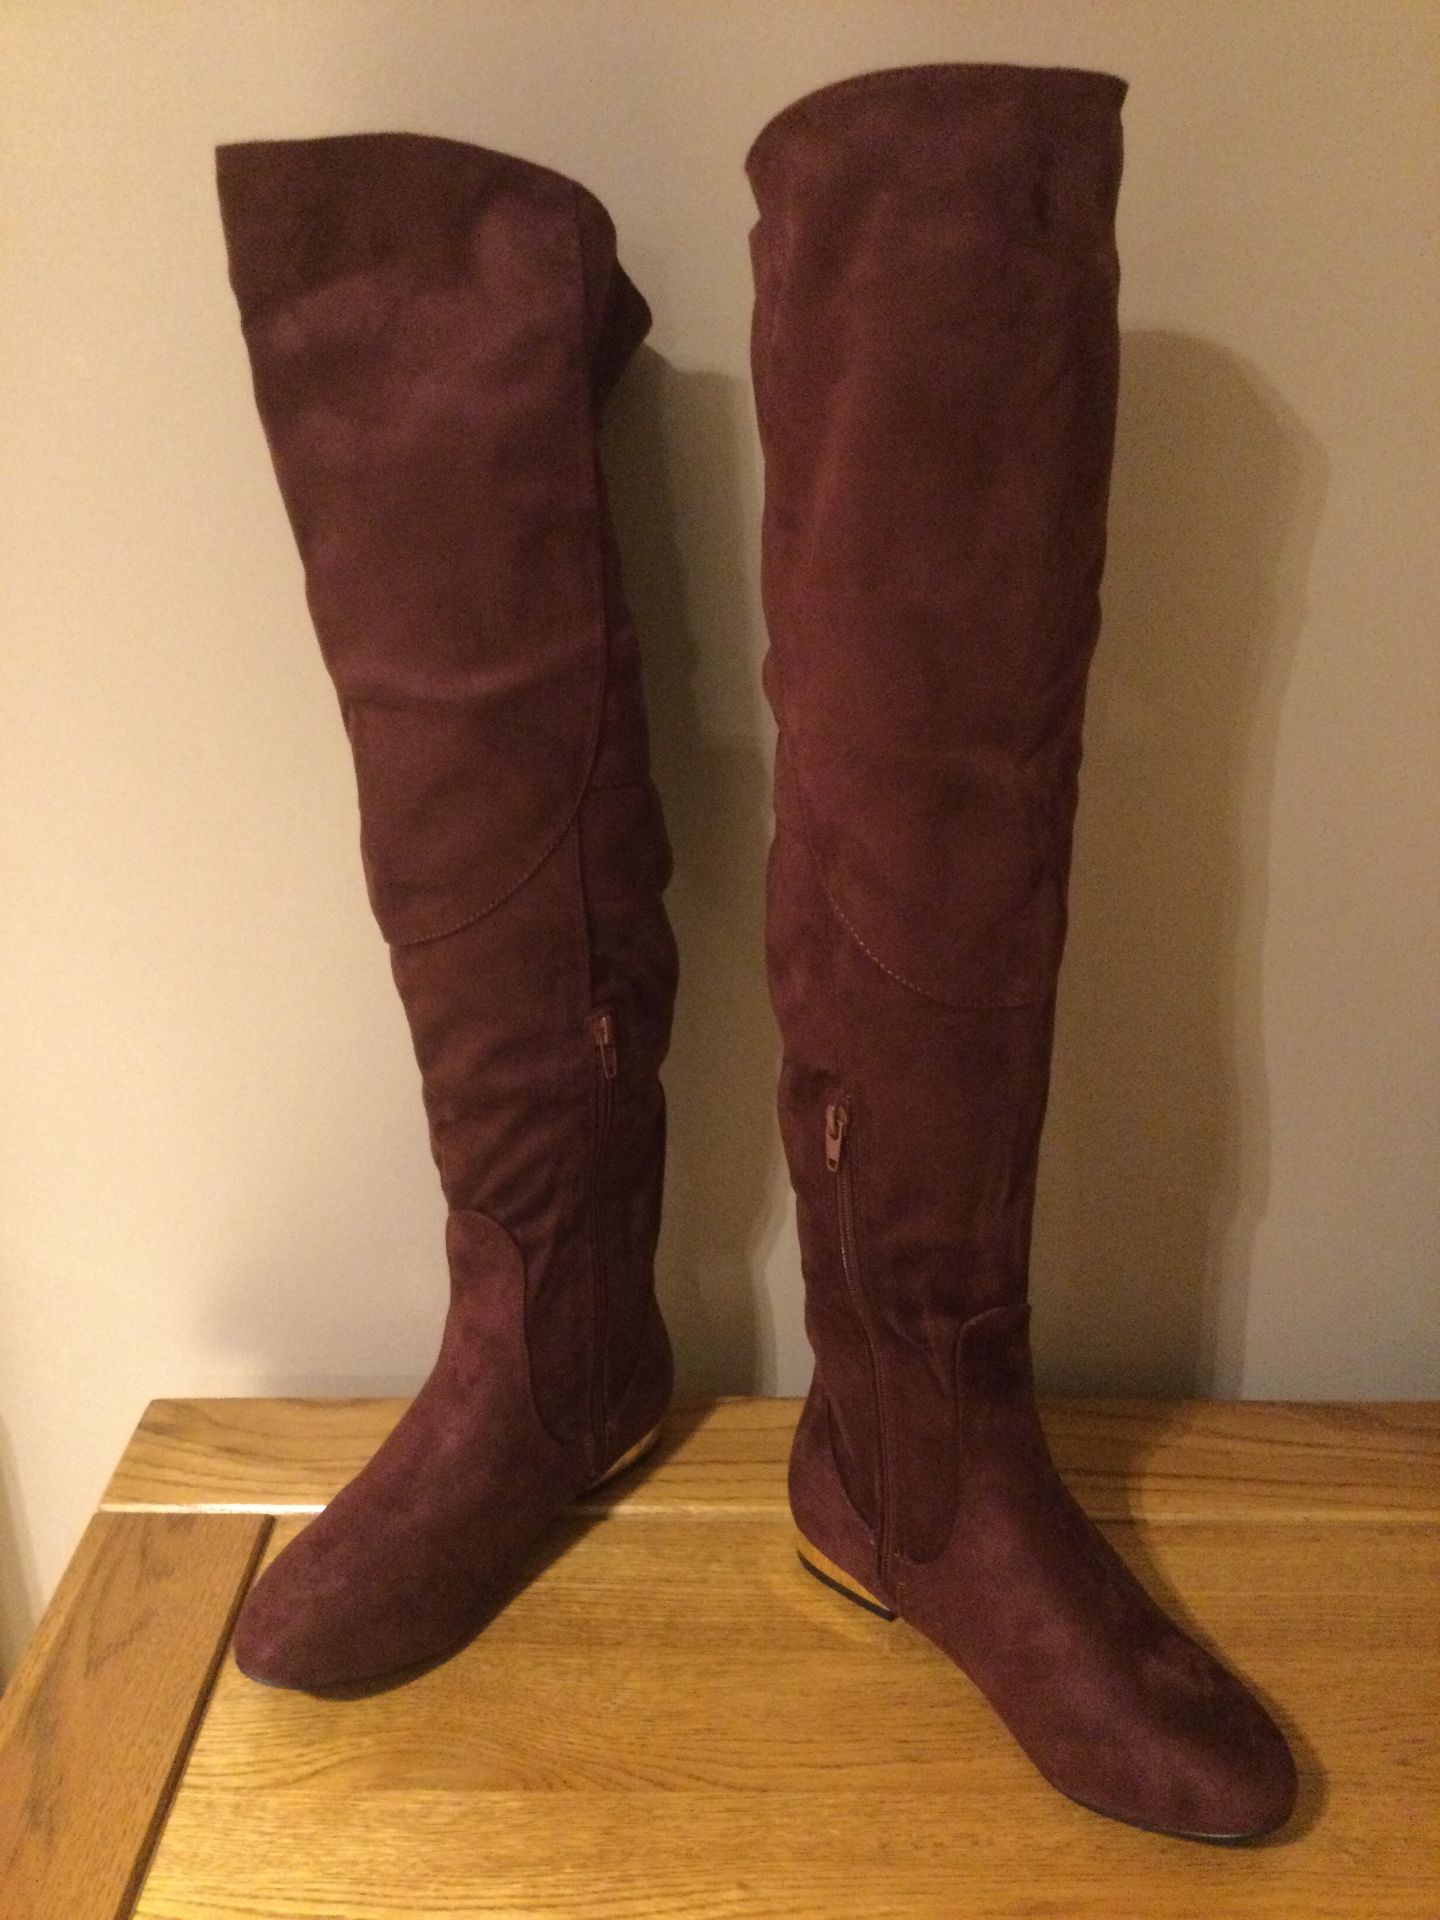 Dolcis “Katie” Long Boots, Low Block Heel, Size 5, Burgundy- New RRP £55.00